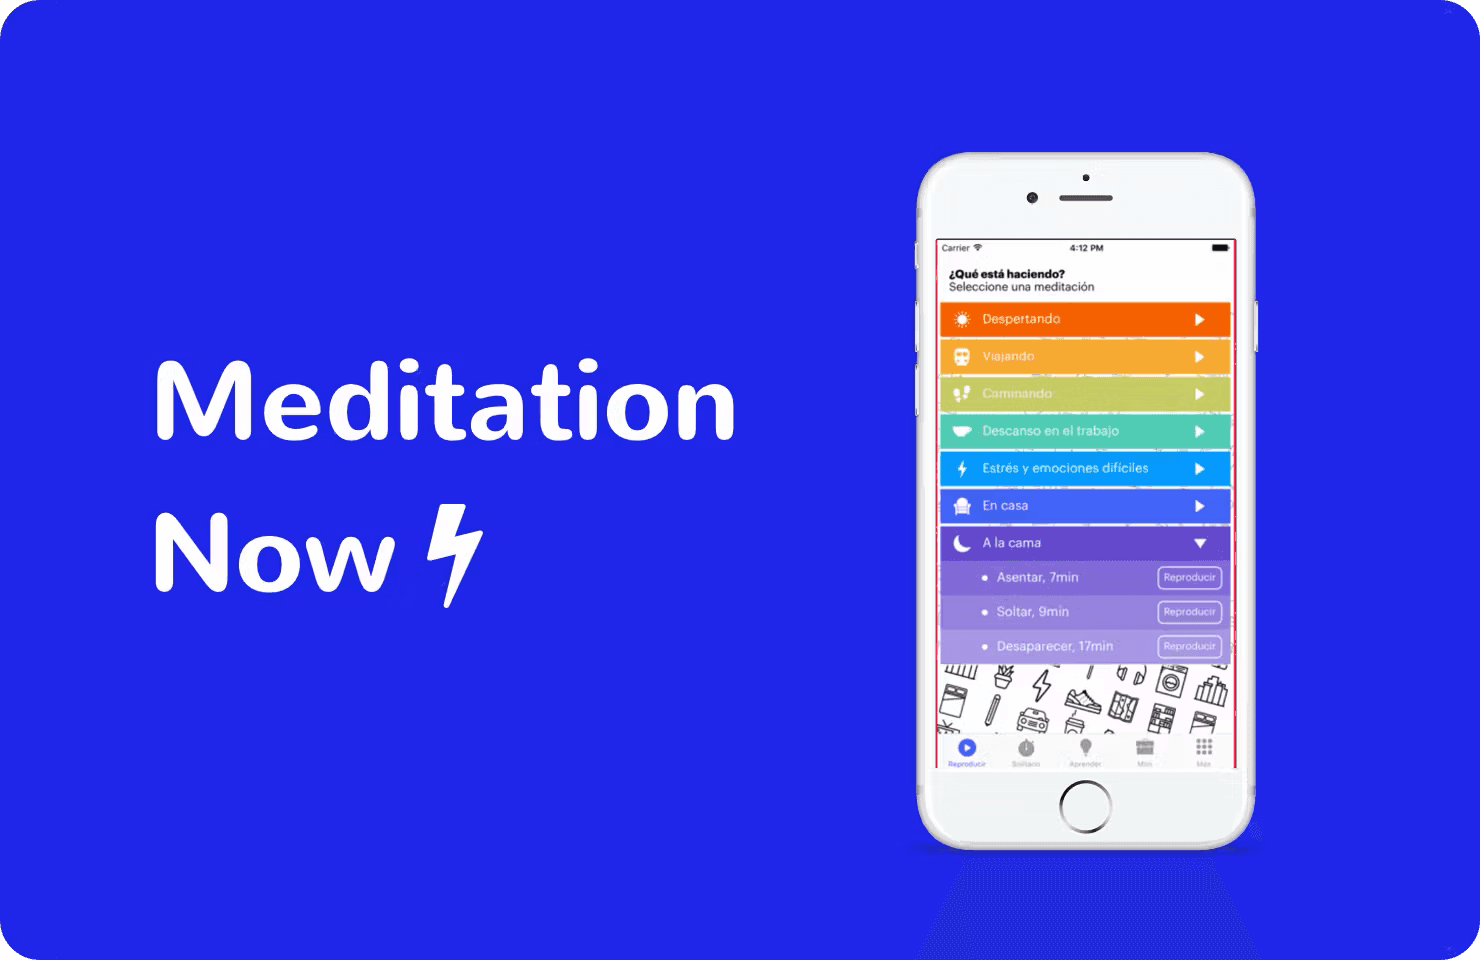 Meditation Now